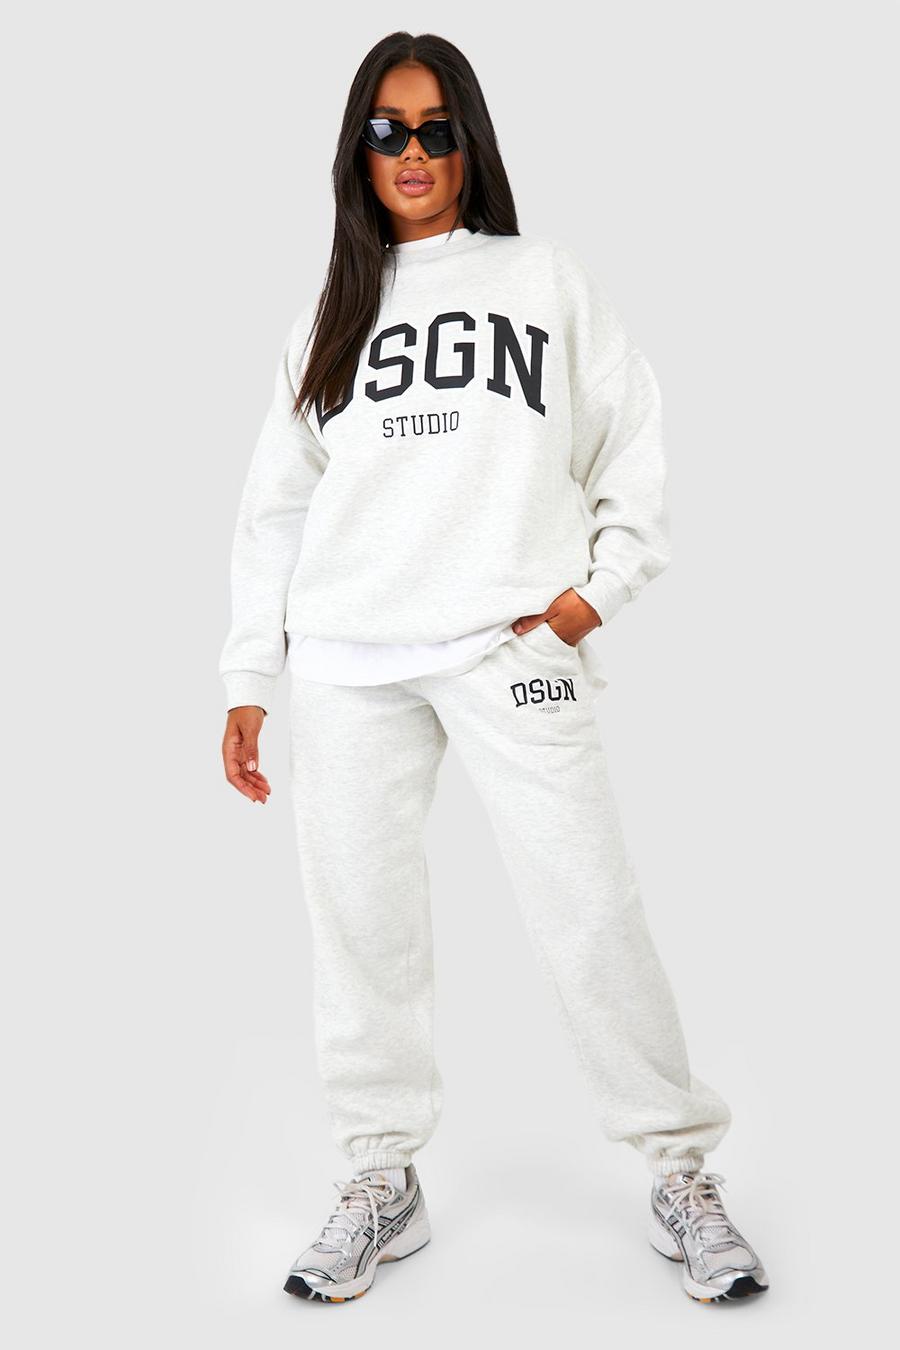 Pantalón deportivo oversize con eslogan Dsgn Studio, Ash grey